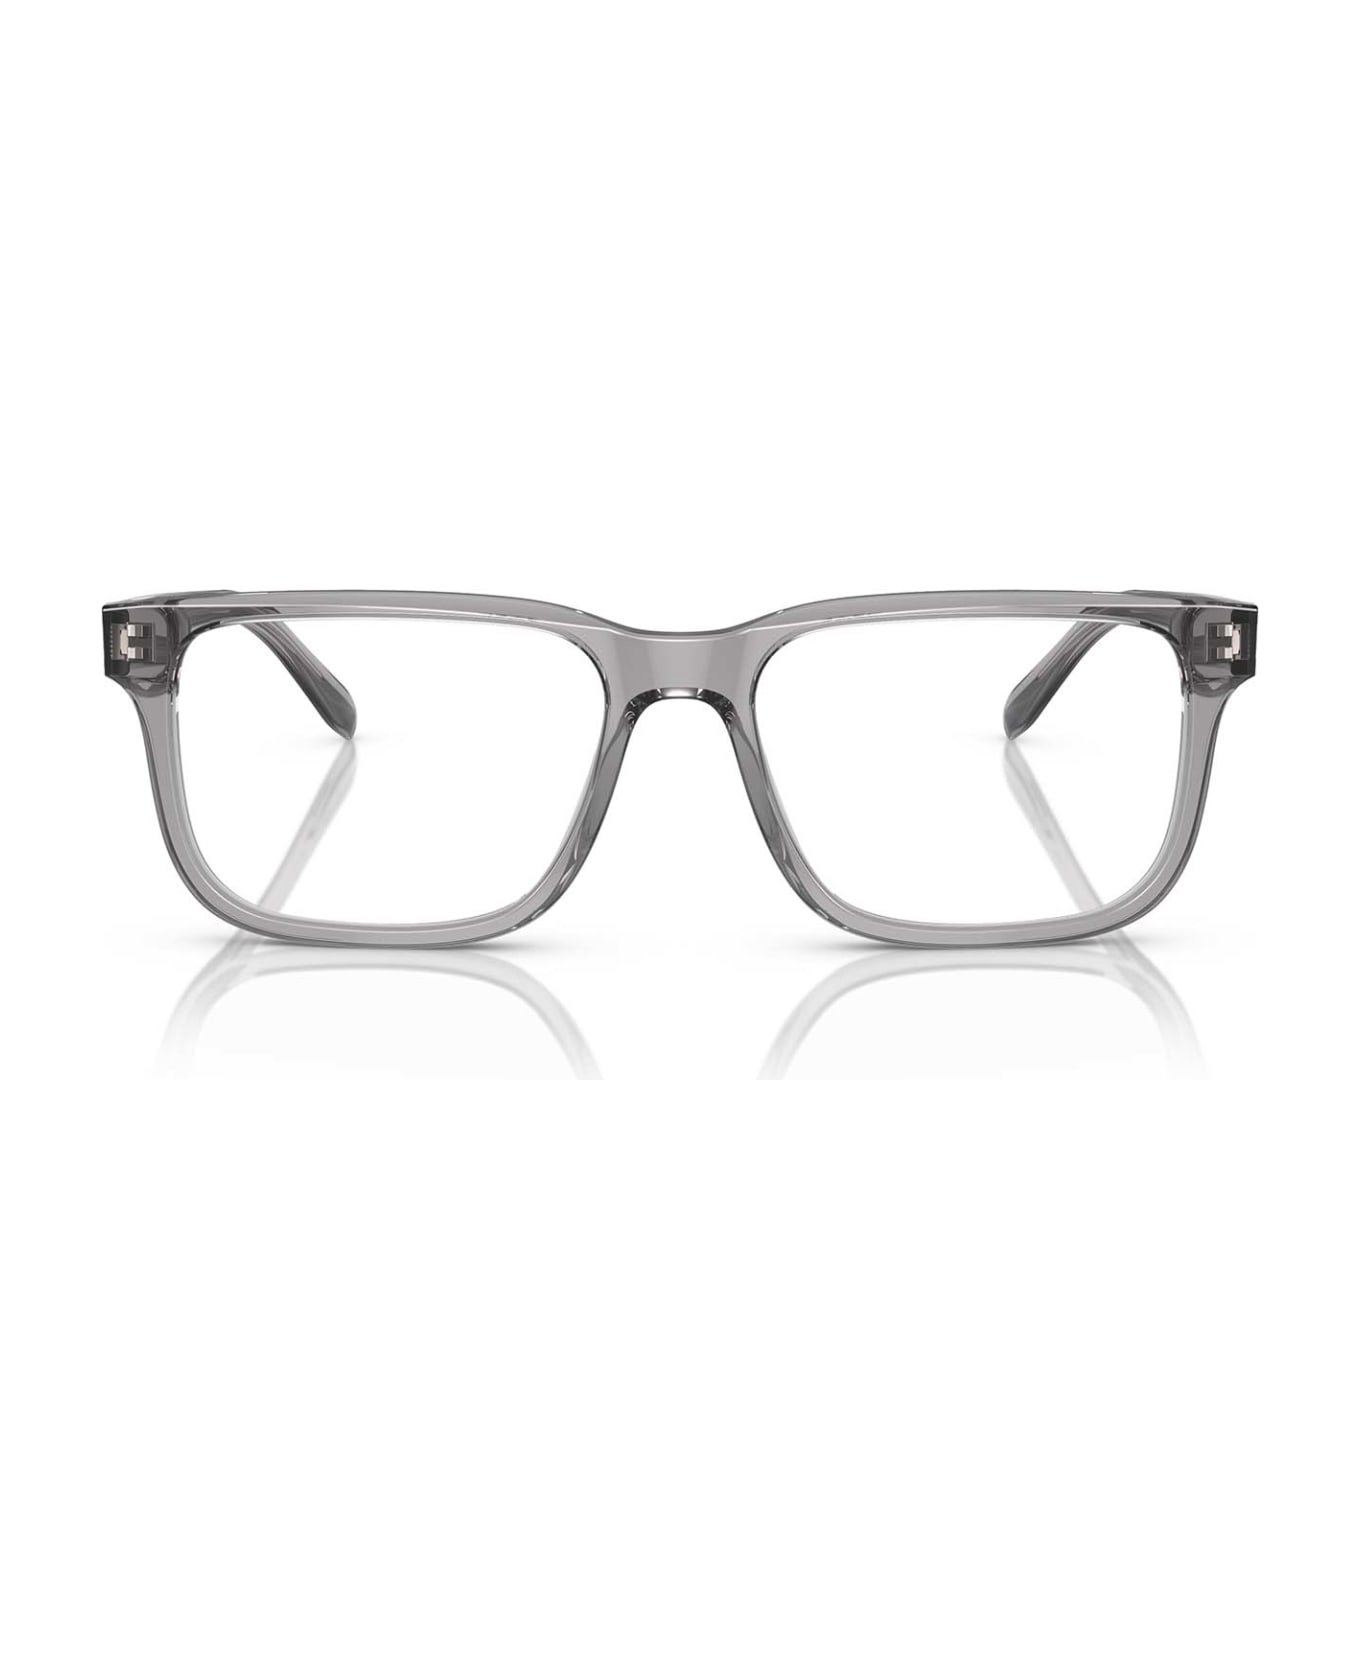 Emporio Armani Ea3218 Shiny Transparent Grey Glasses - Shiny Transparent Grey アイウェア